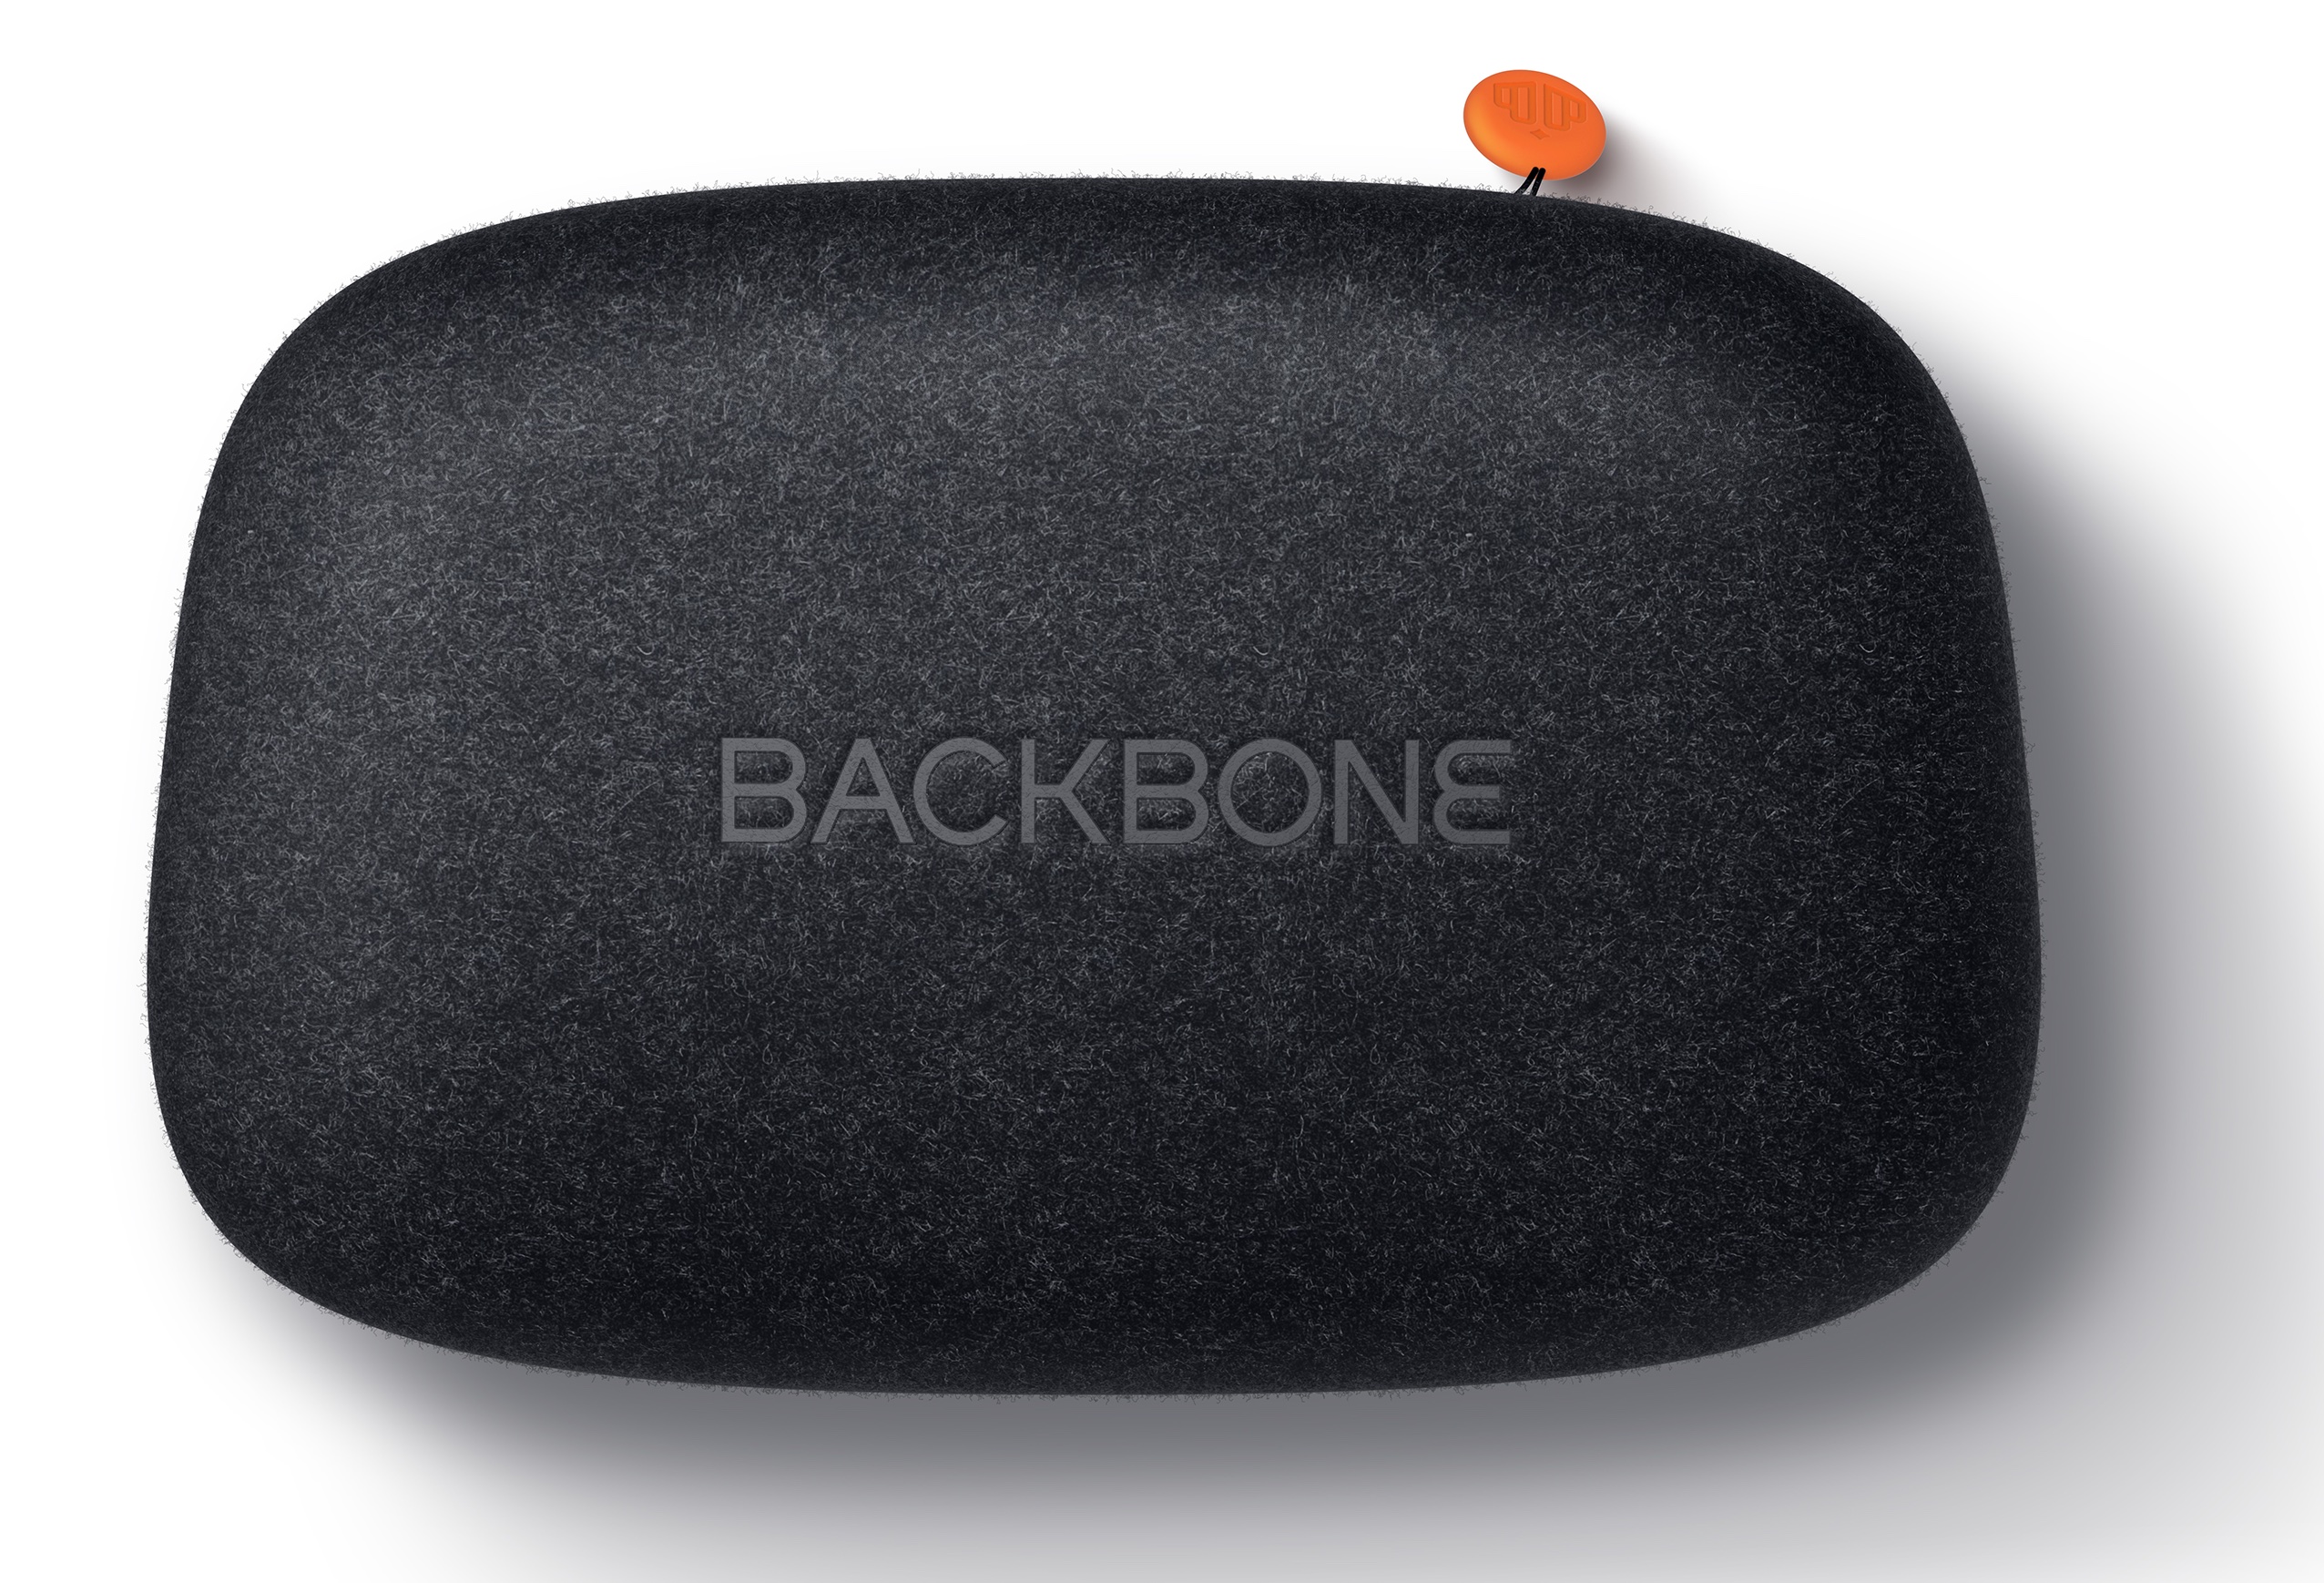 Backbone One USB-C (2nd gen) review: A triumphant second attempt